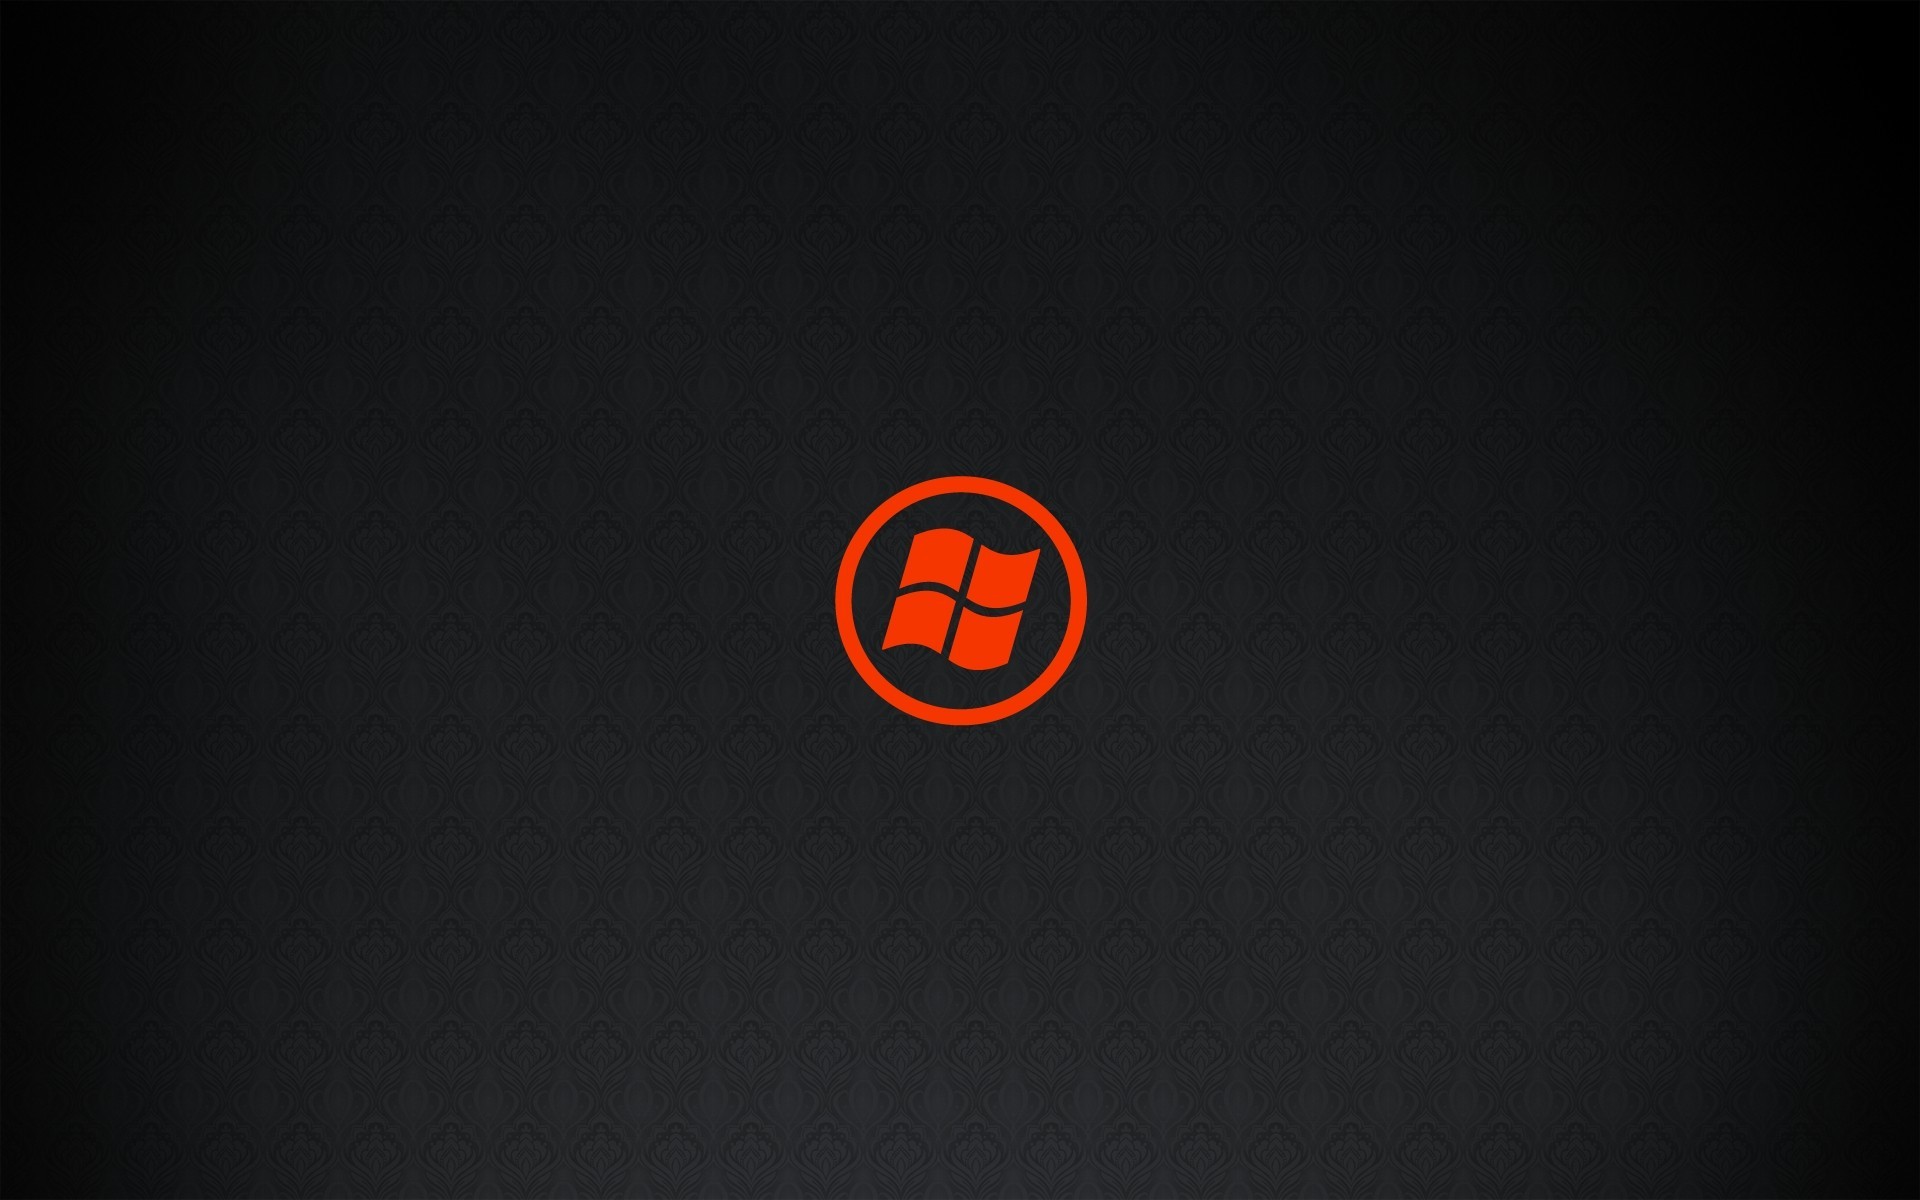 Windows logo wallpaper 9545 1920x1200